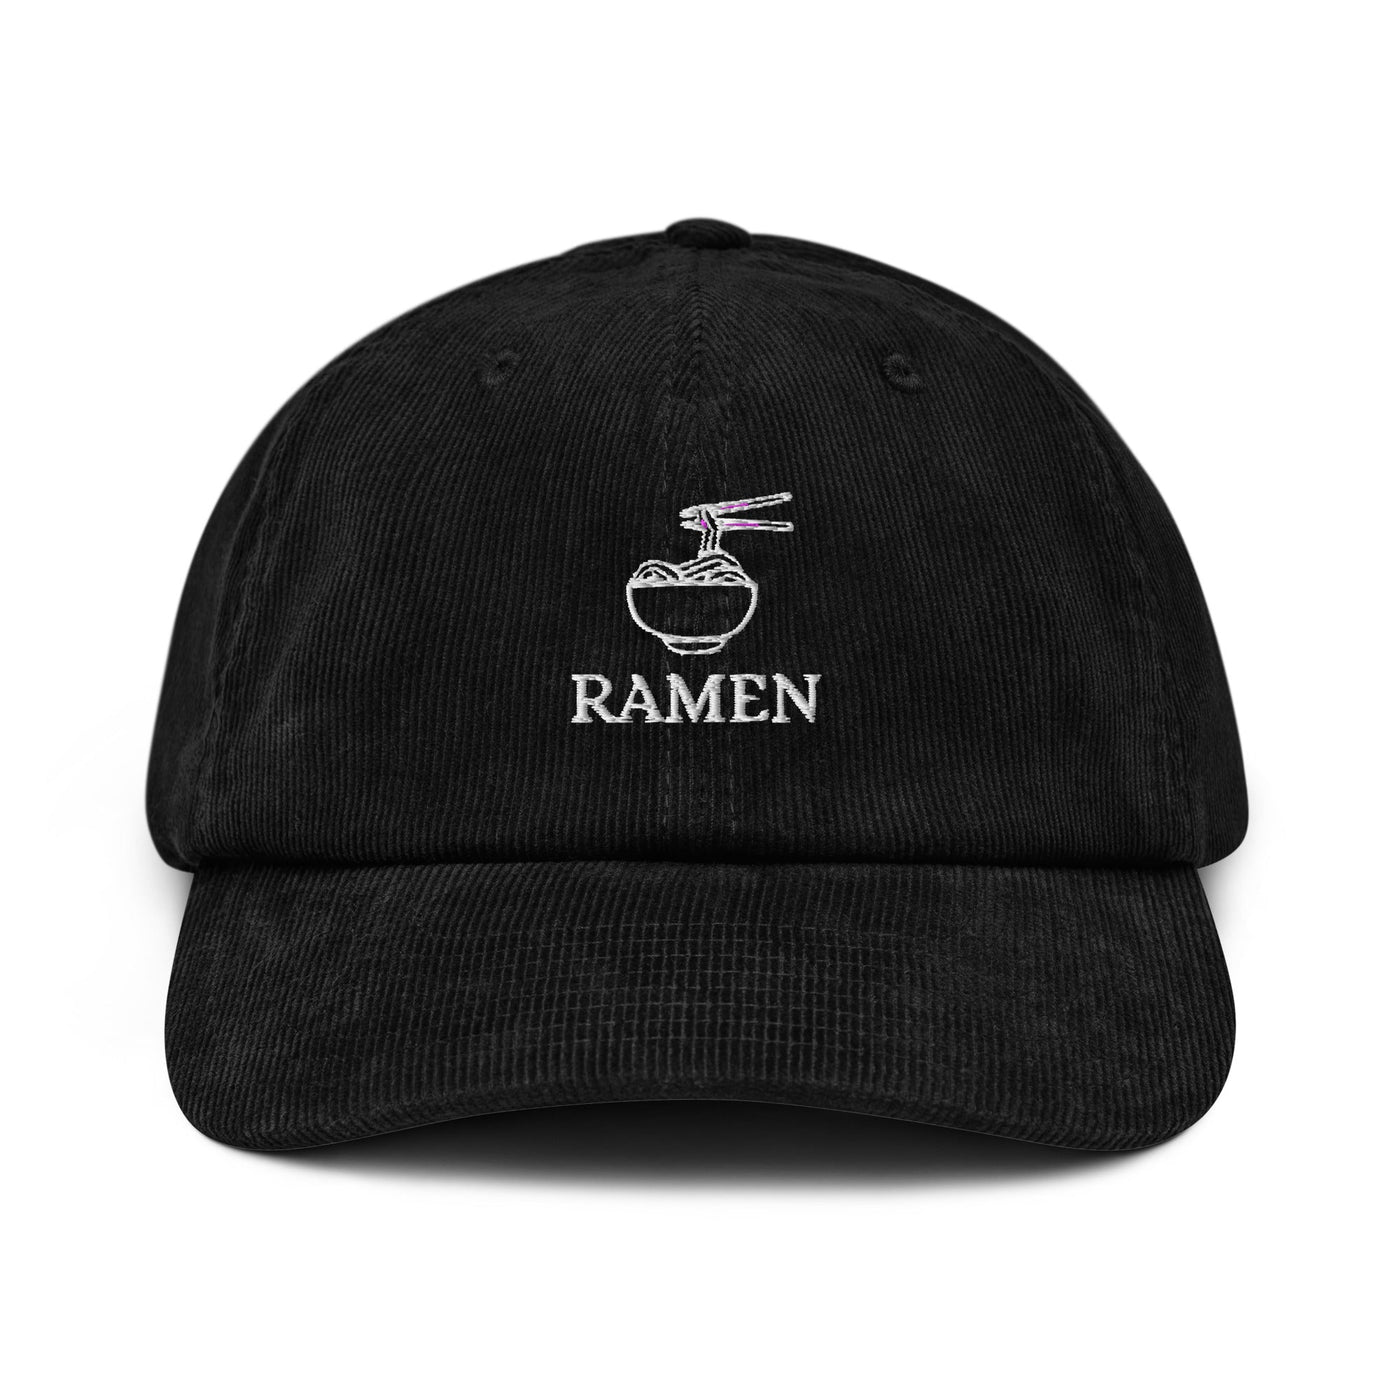 Ramen Bowl Corduroy hat - Black - - Just Another Cap Store